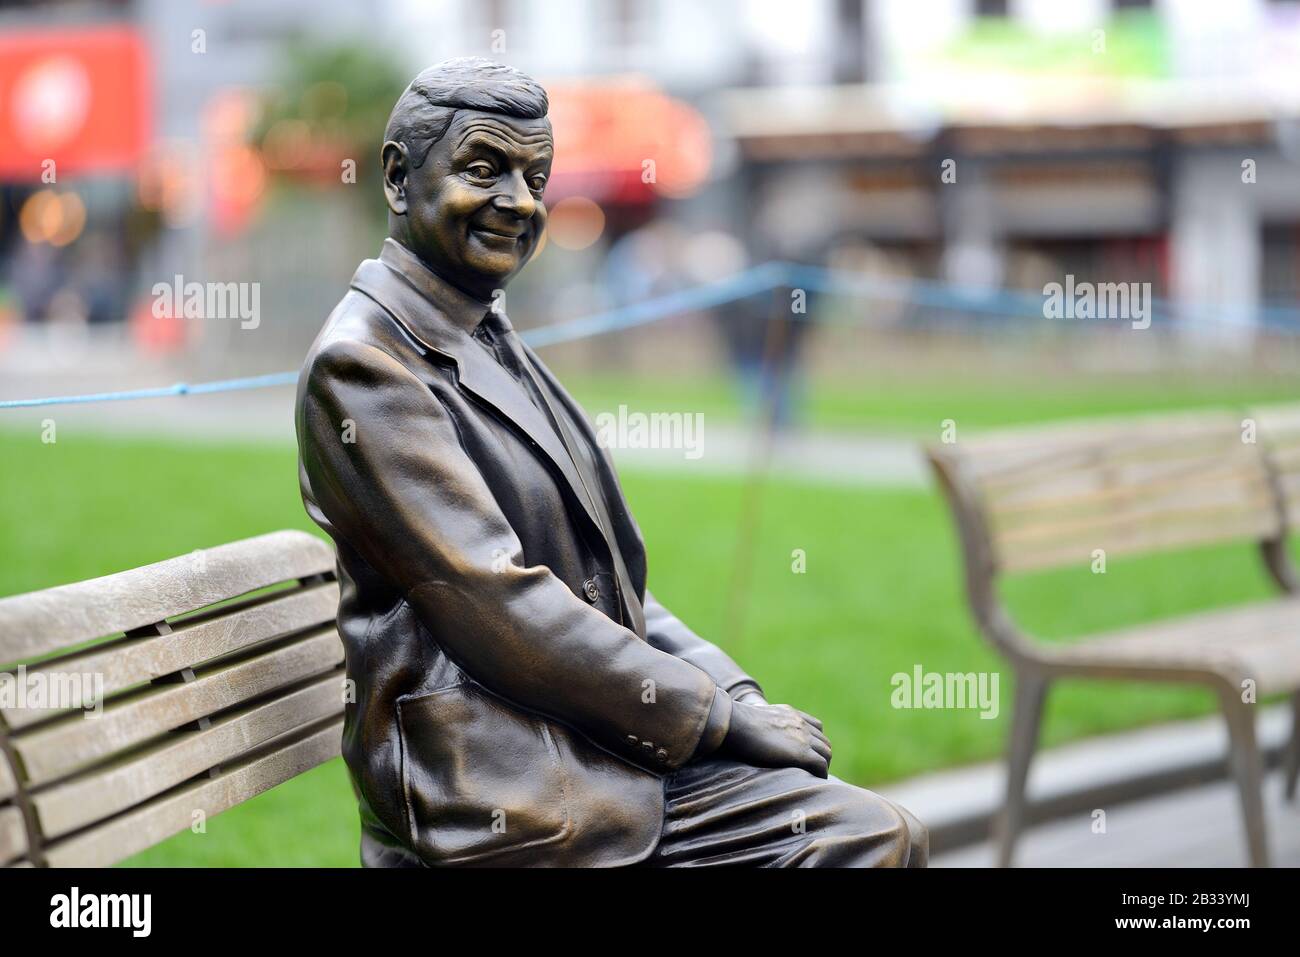 London, England, UK. 'Scenes in the Square' statue trail - Mr Bean Stock Photo